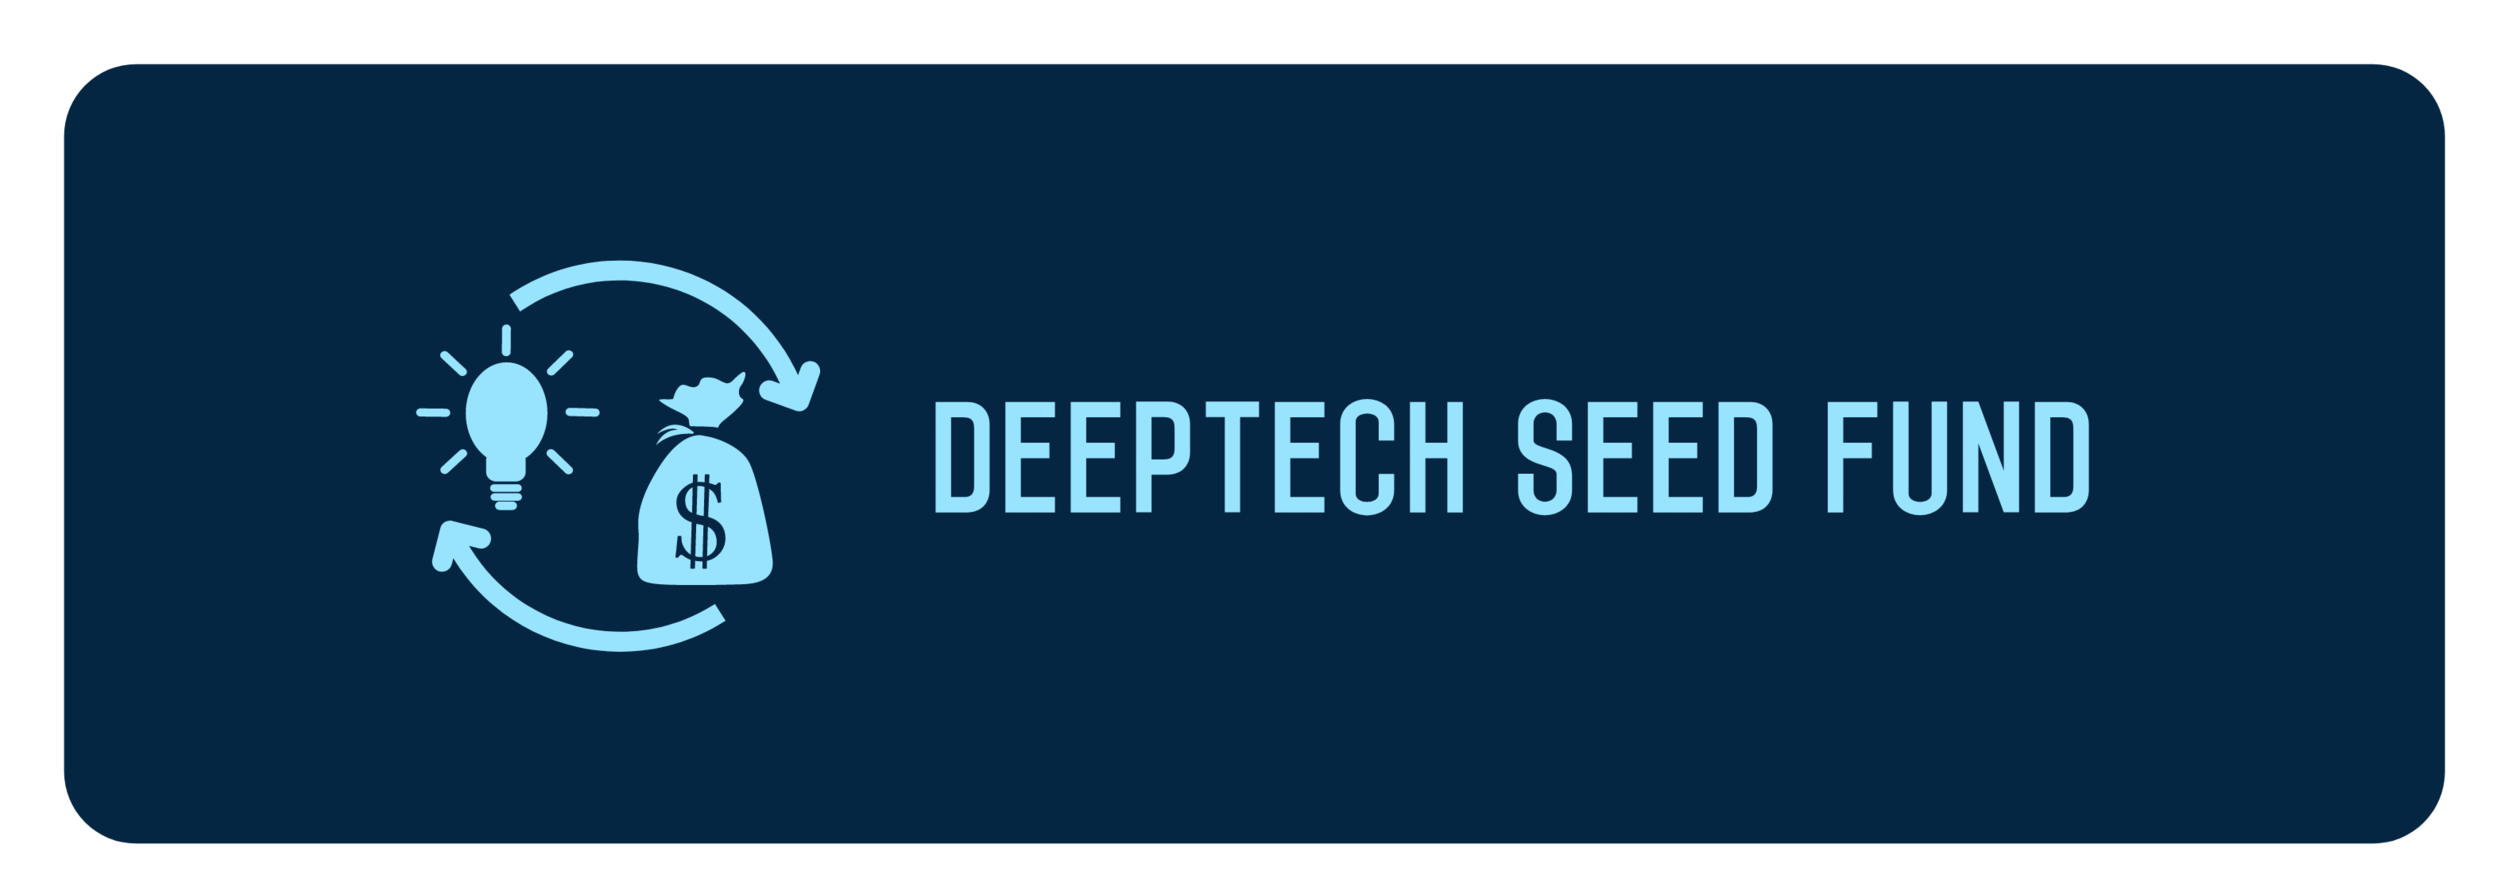 Deeptech Seed Fund